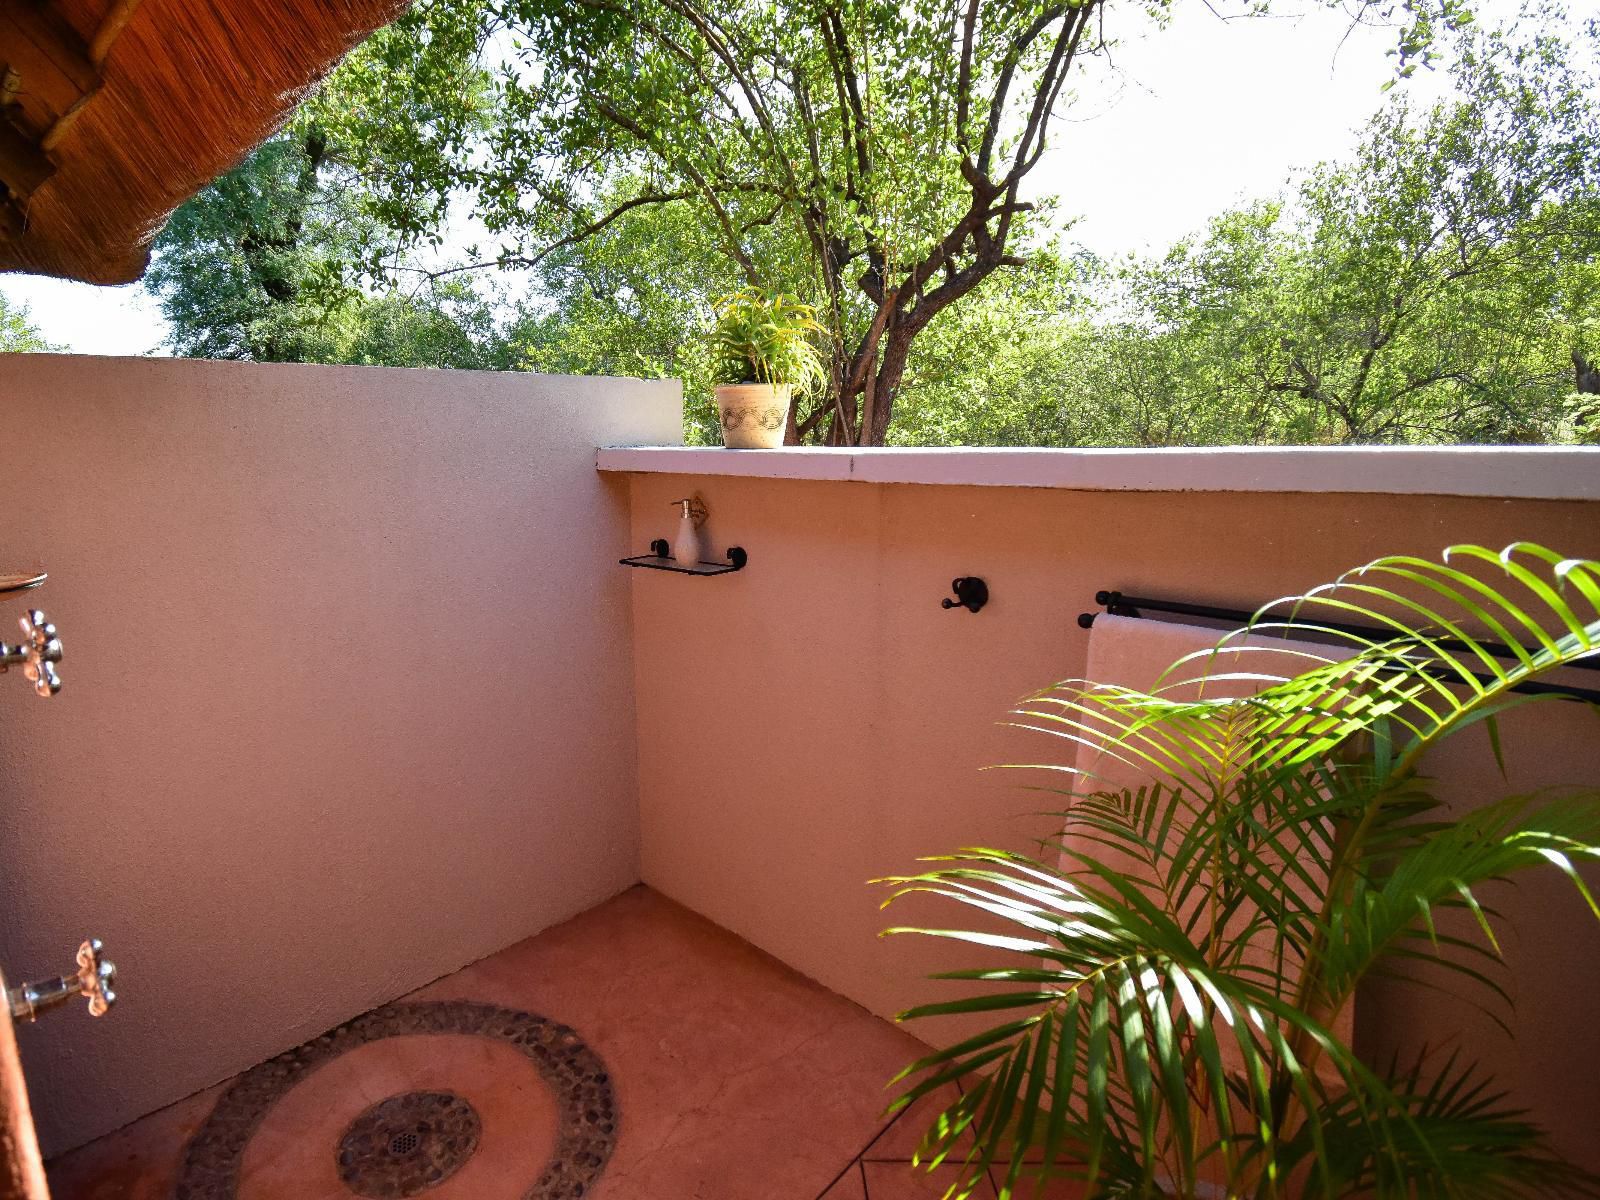 Mohlabetsi Safari Lodge Balule Nature Reserve Mpumalanga South Africa Bathroom, Garden, Nature, Plant